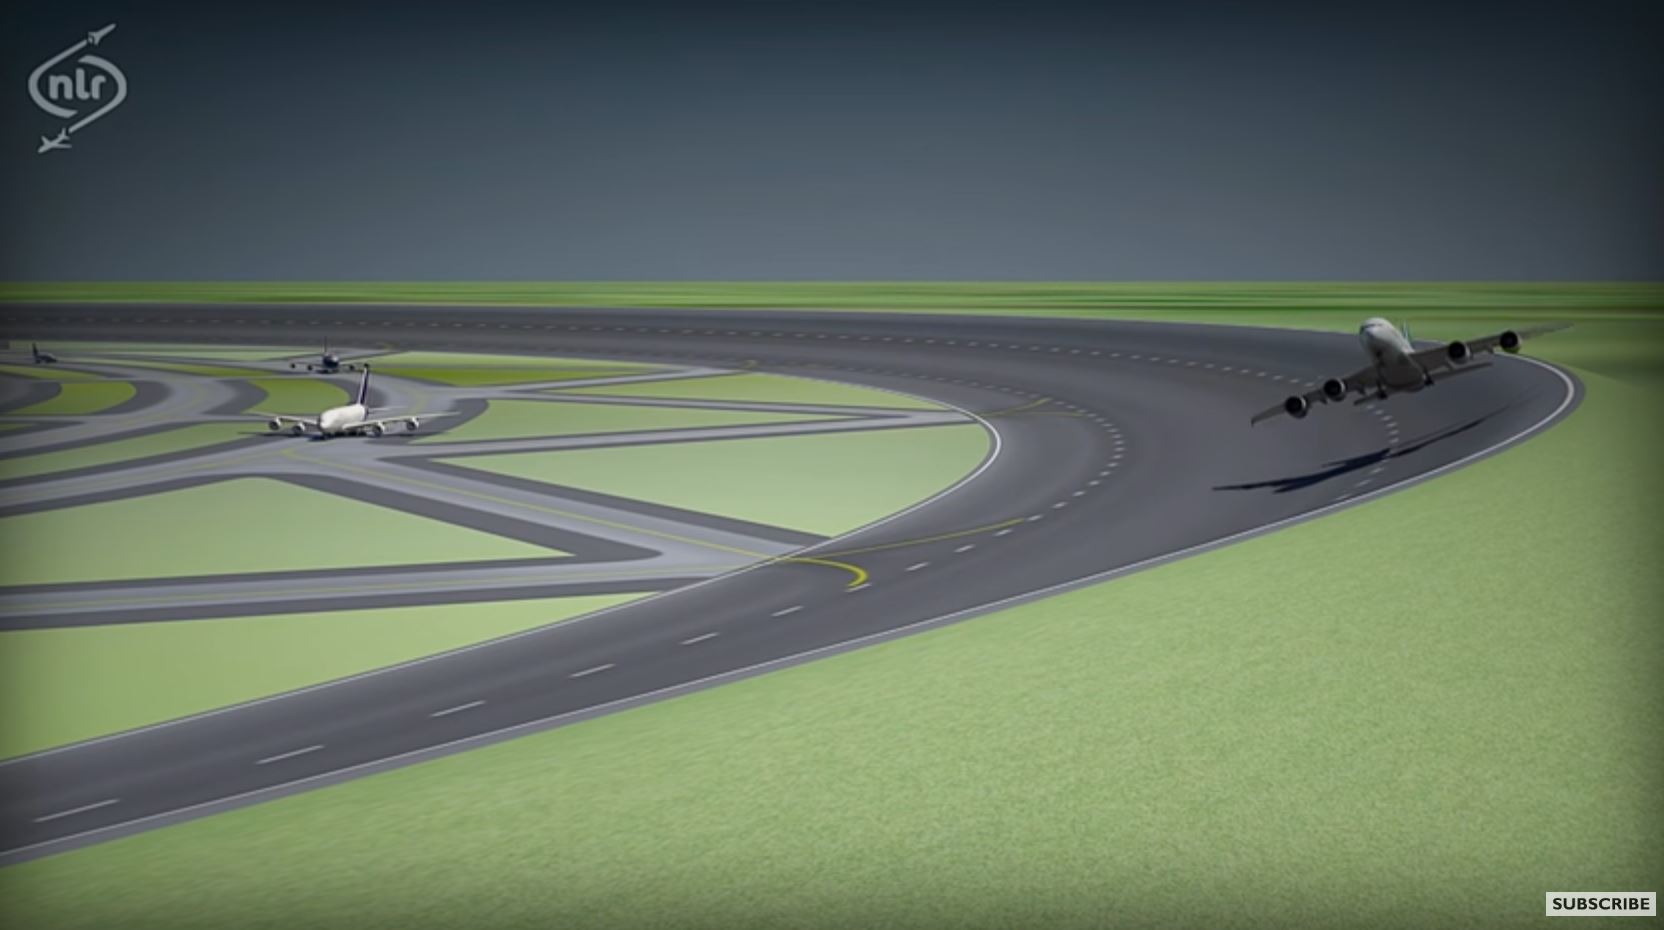 Will circular runways ever take-off?